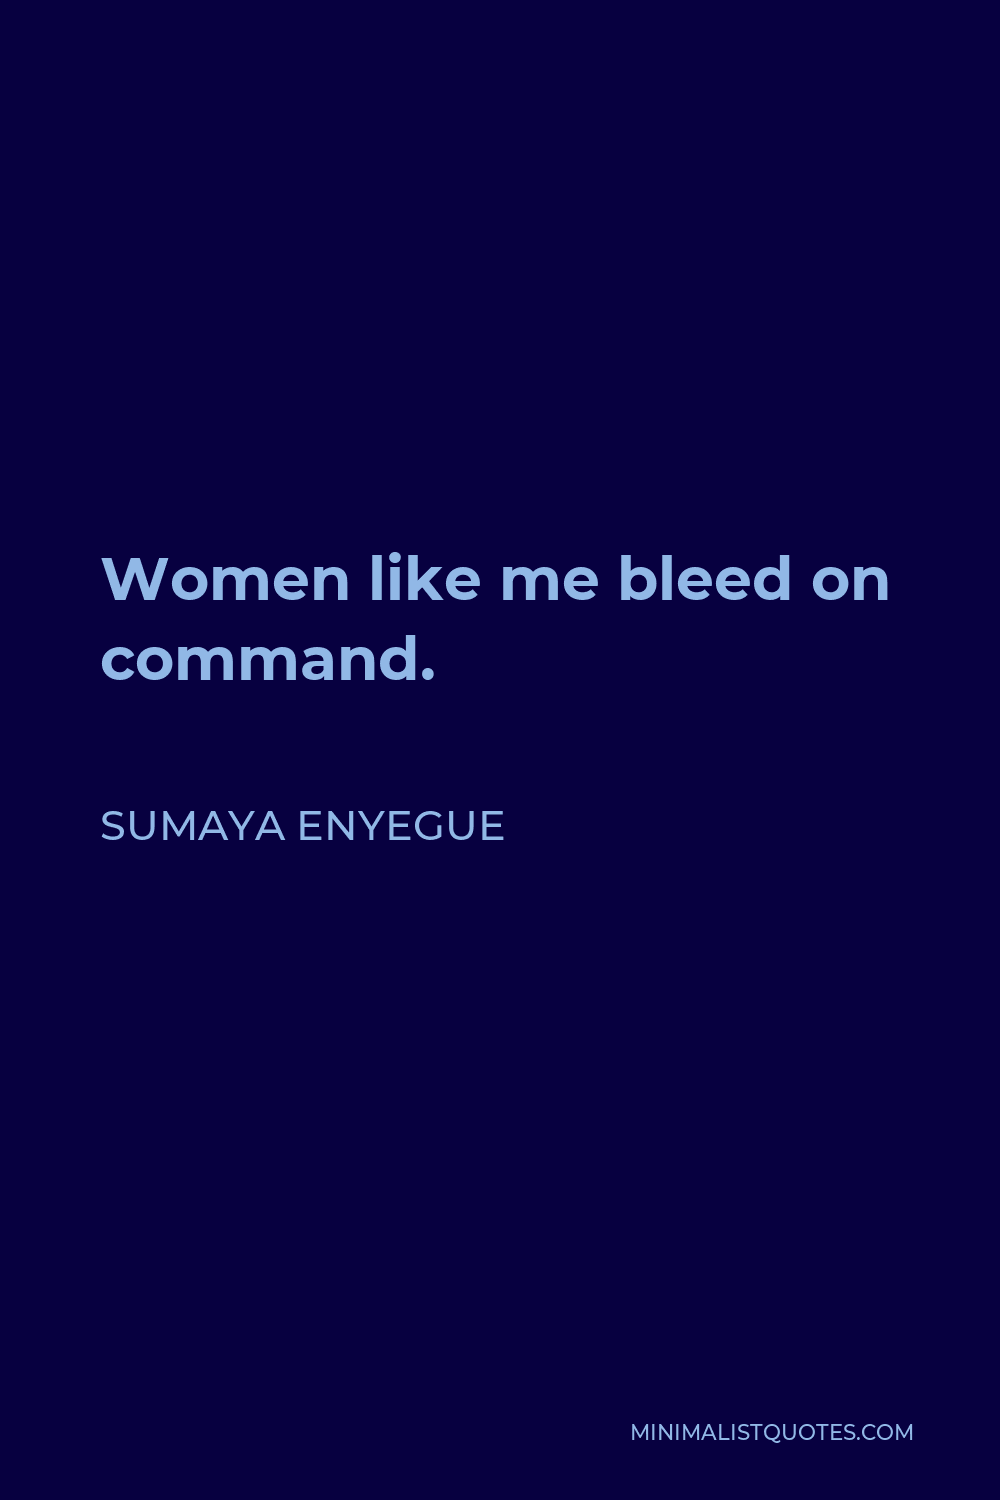 Sumaya Enyegue Quote - Women like me bleed on command.